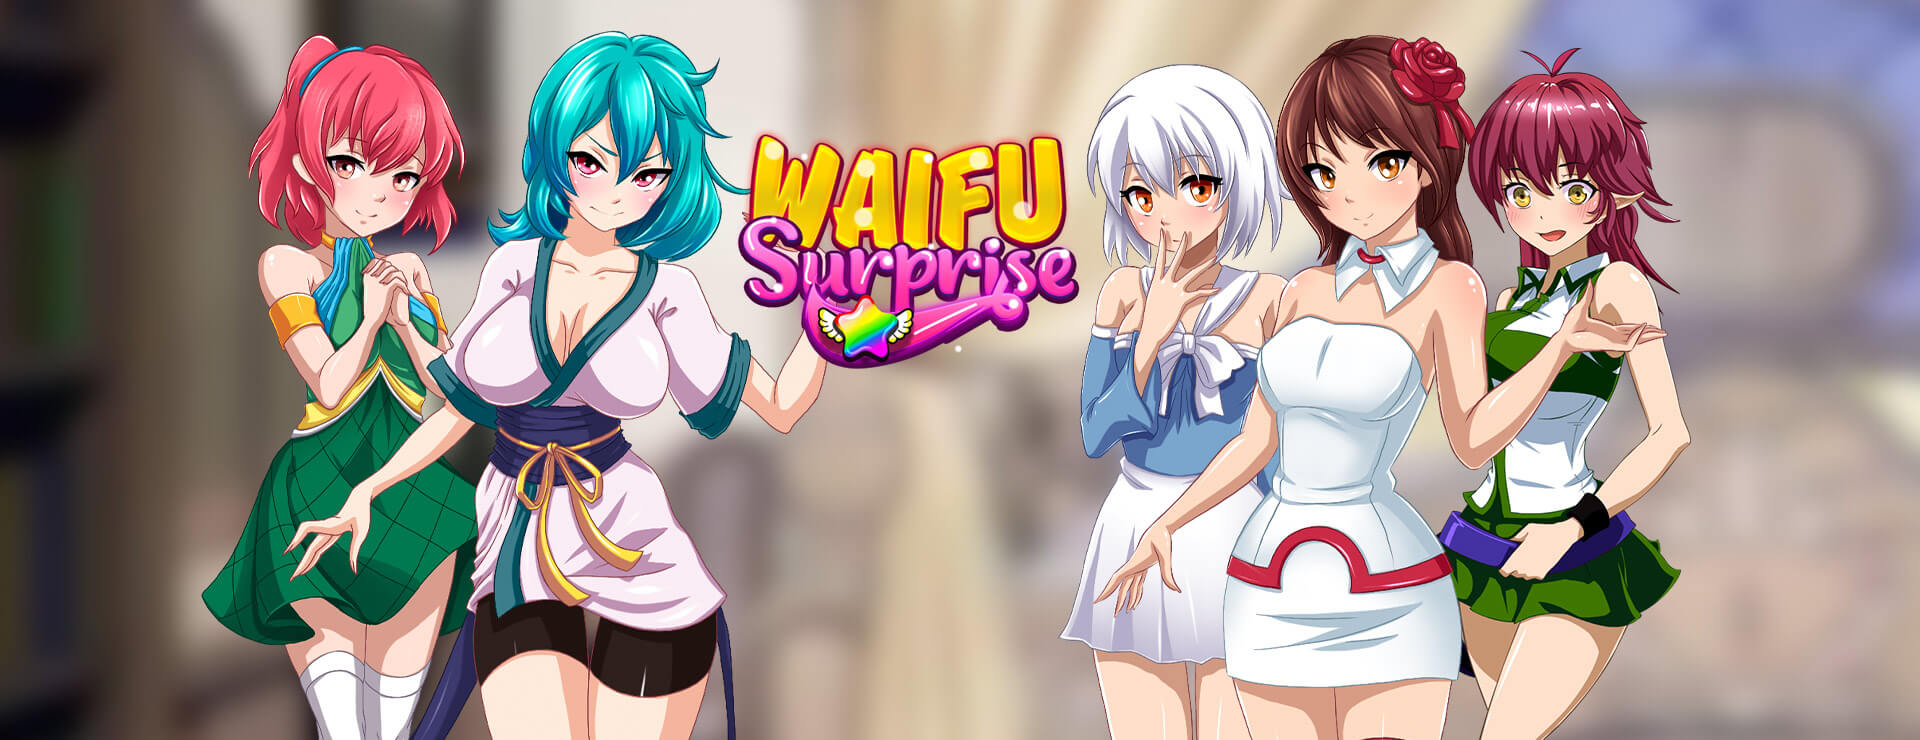 Waifu Surprise - Action Adventure Spiel